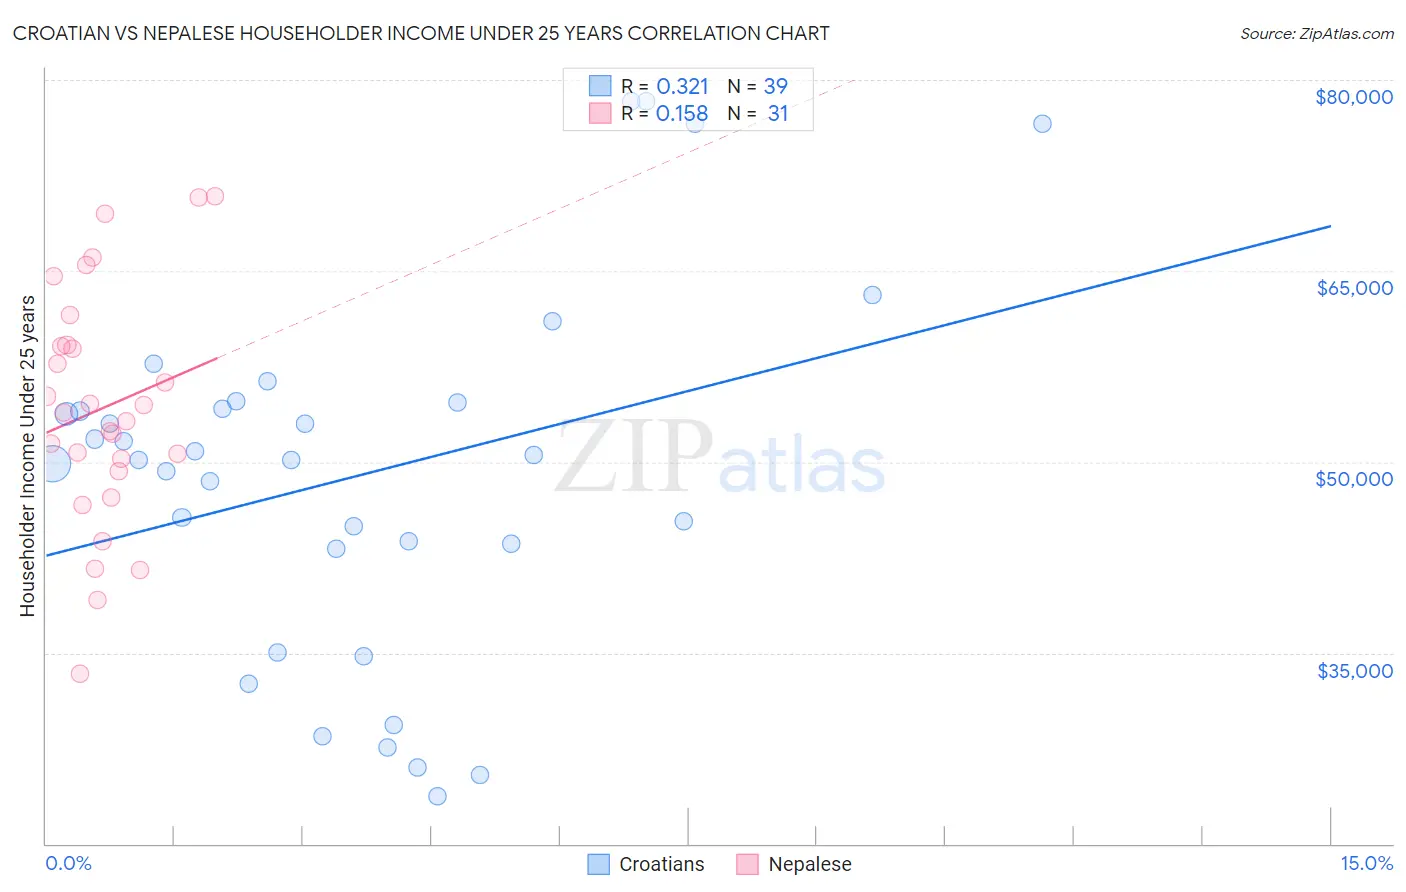 Croatian vs Nepalese Householder Income Under 25 years